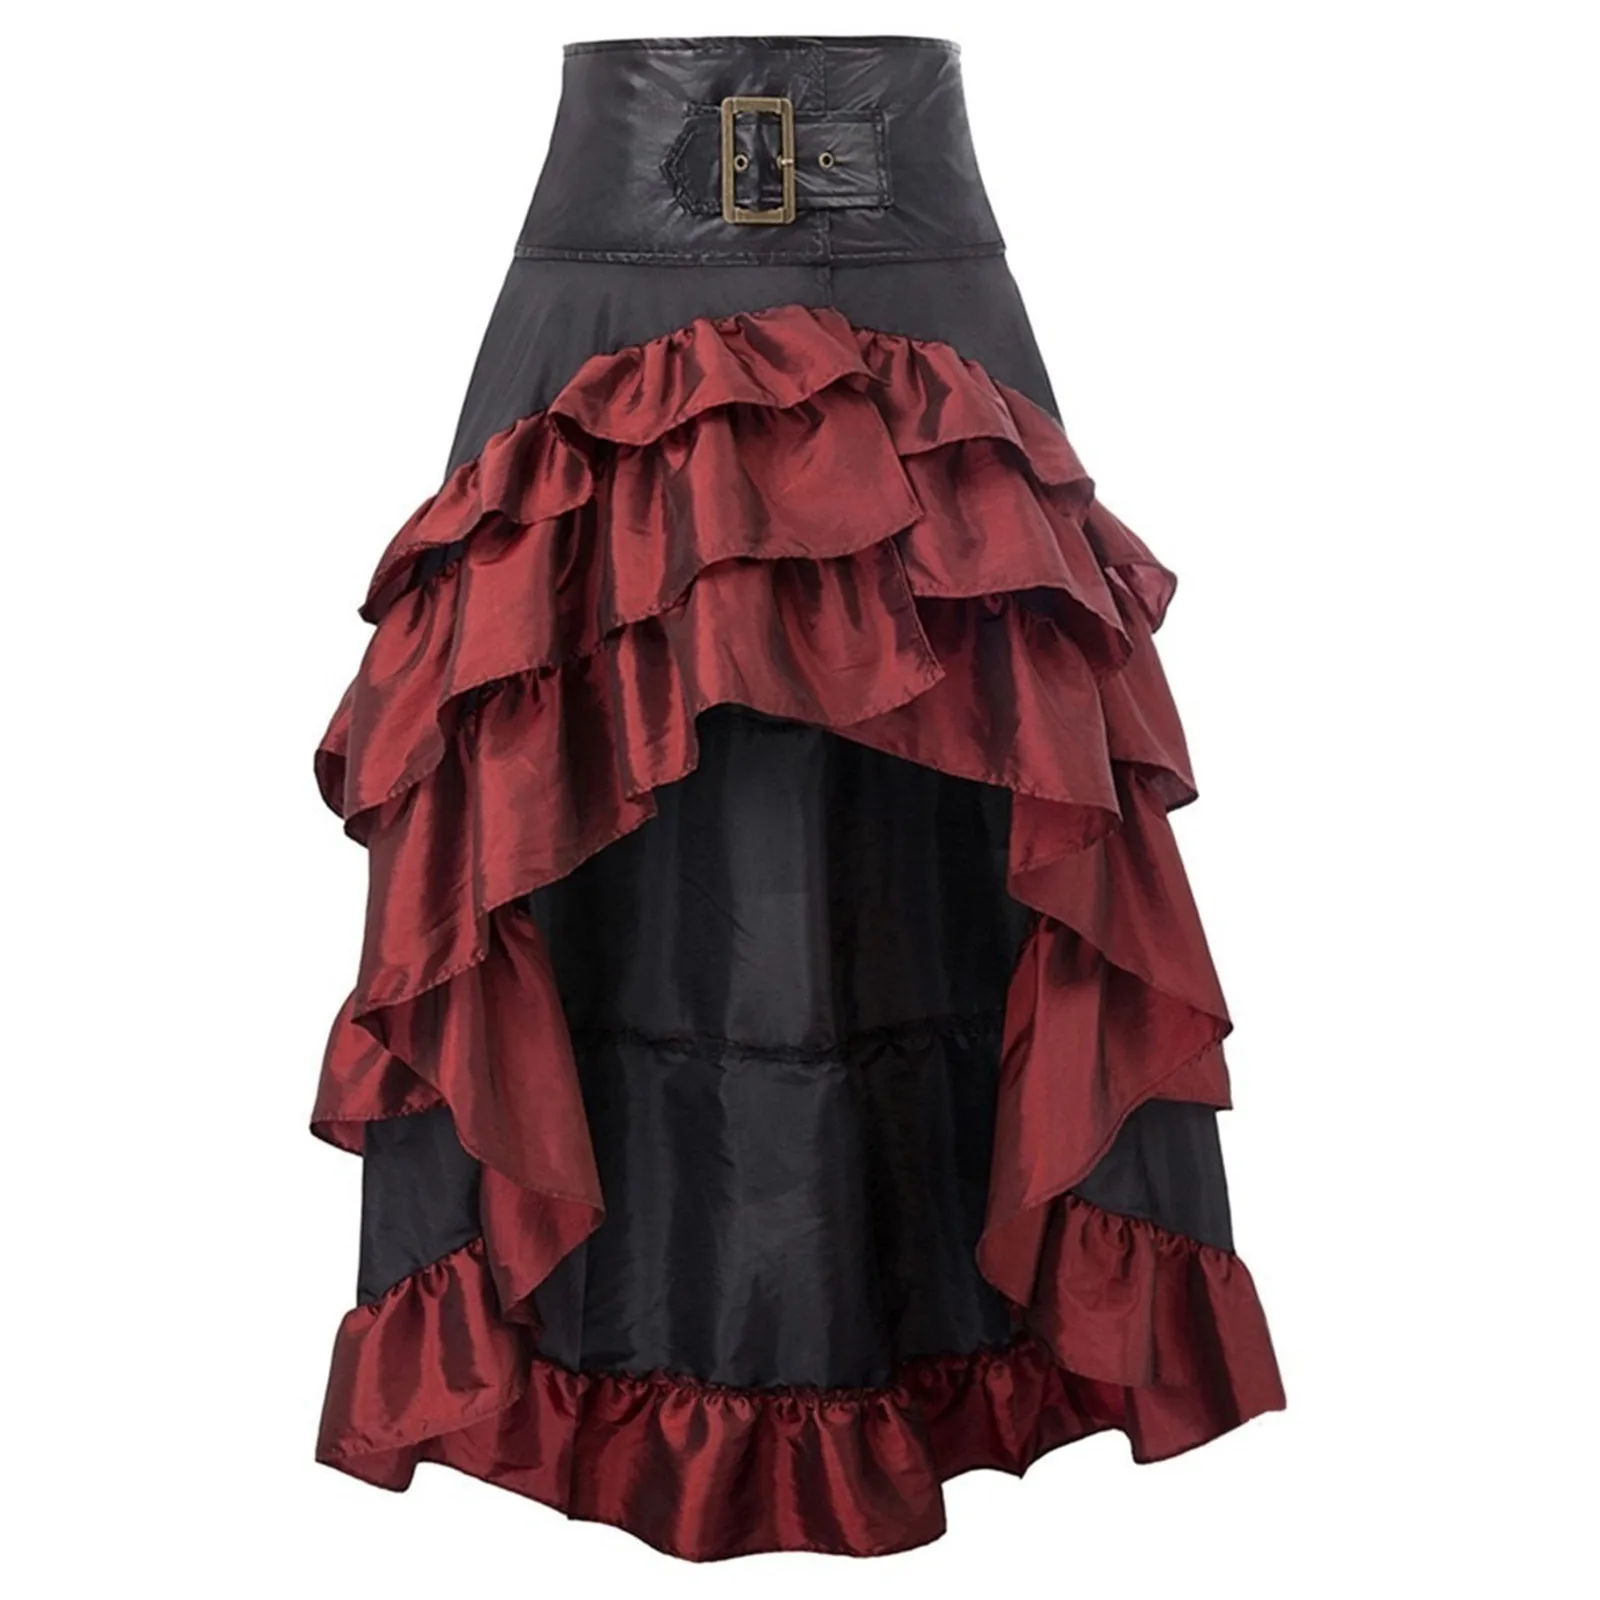 

New Victorian Asymmetrical Ruffled Trim Gothic Long Skirts Women Corset Skirt Vintage Steampunk Showgirl Party Dress Skirts